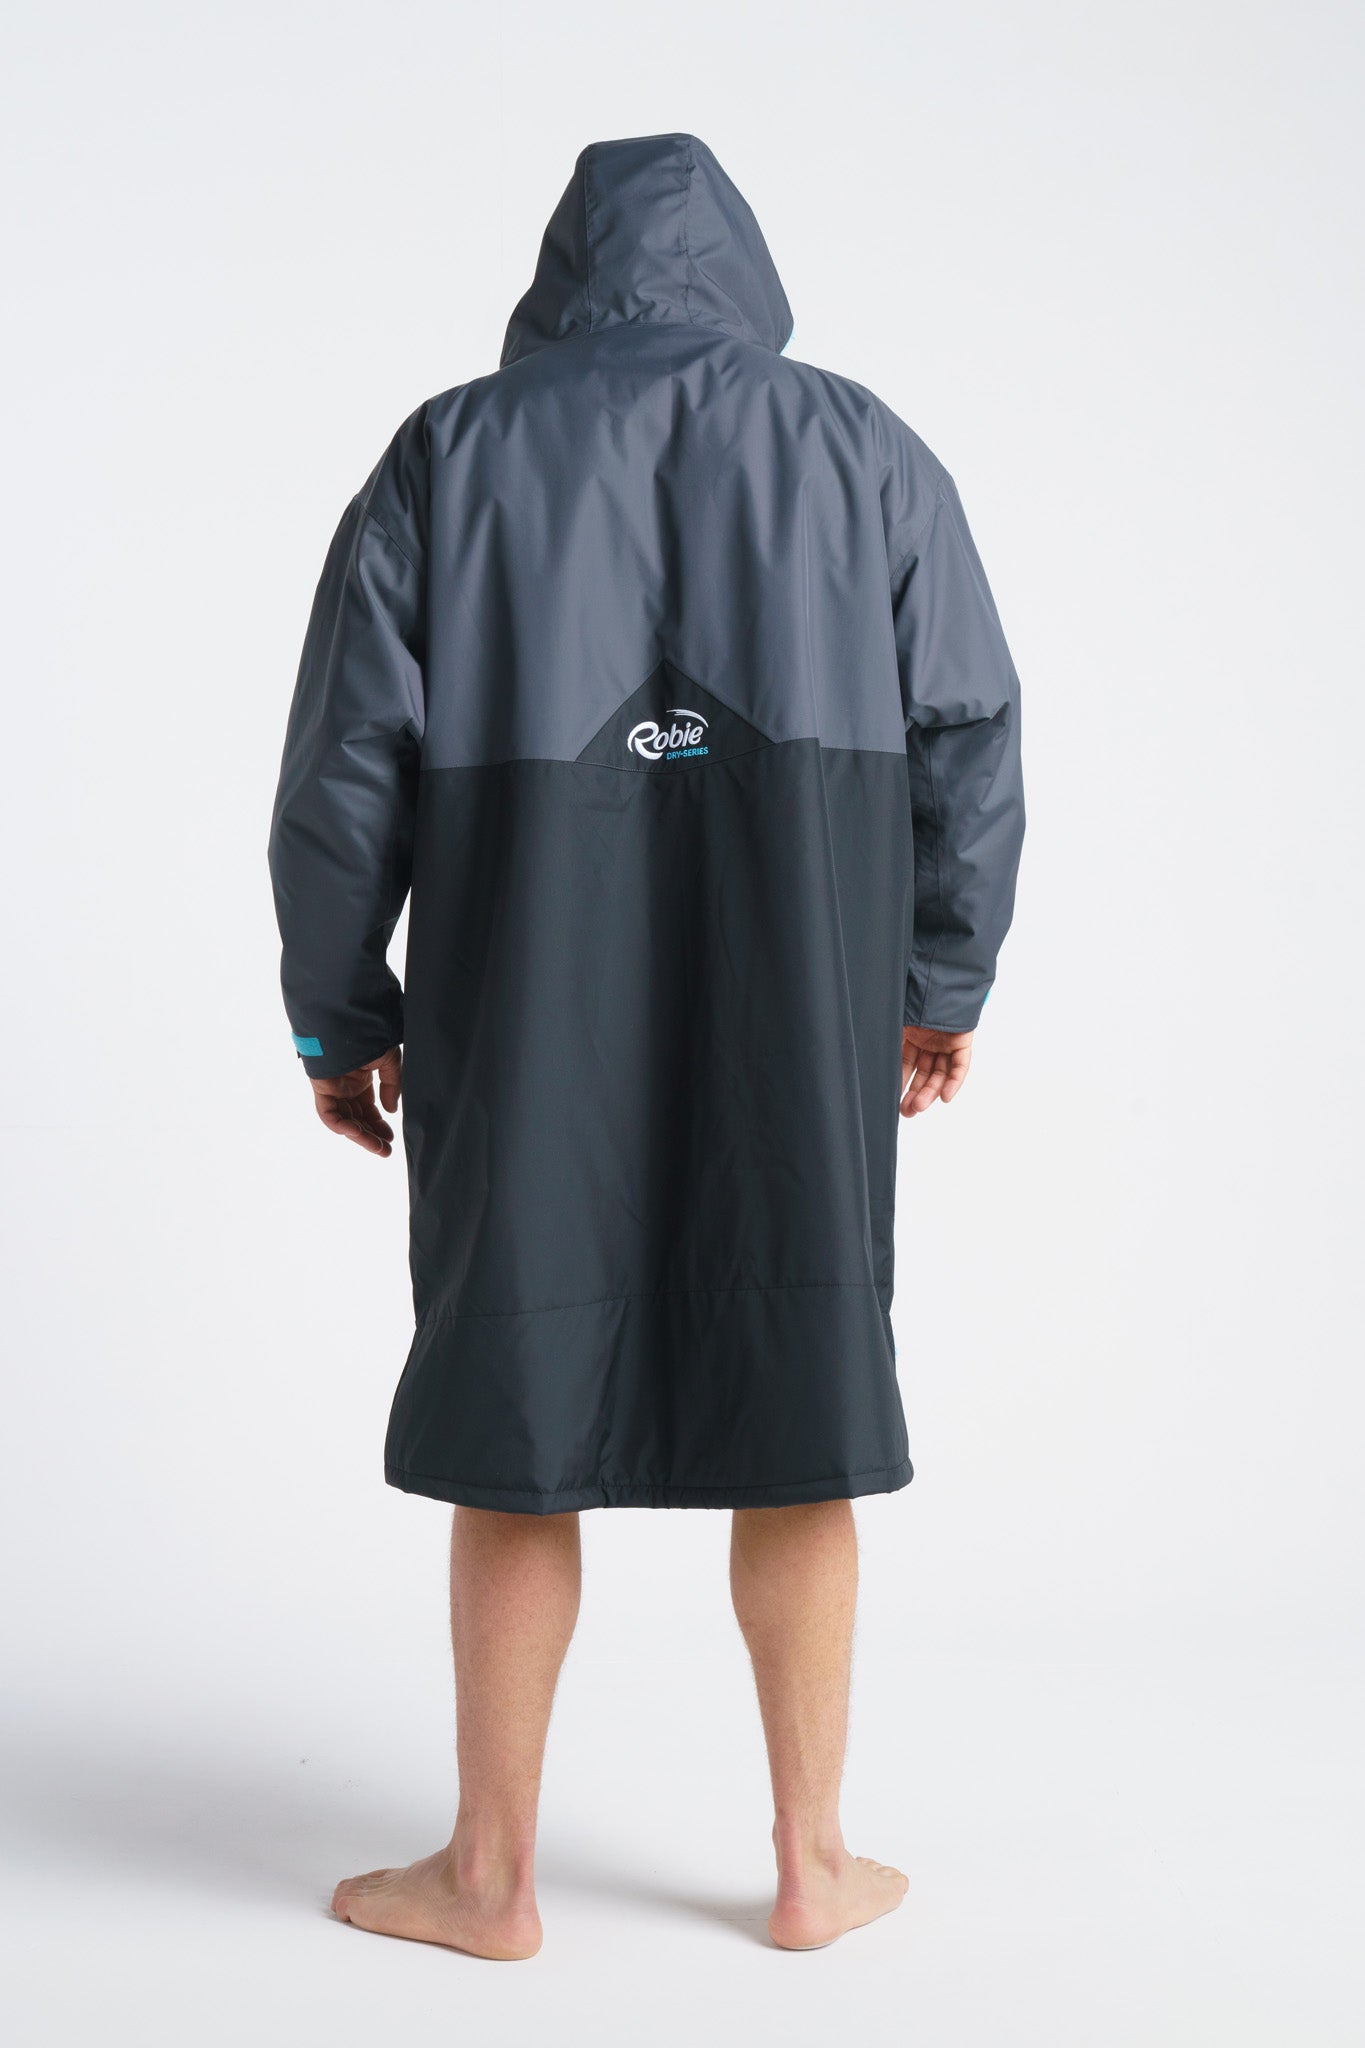 robie-robes-dry-series-changing-robe-waterproof-preorder-product-blacksheepsurfco-galway-ireland-charcoal-blue-atoll-medium-3